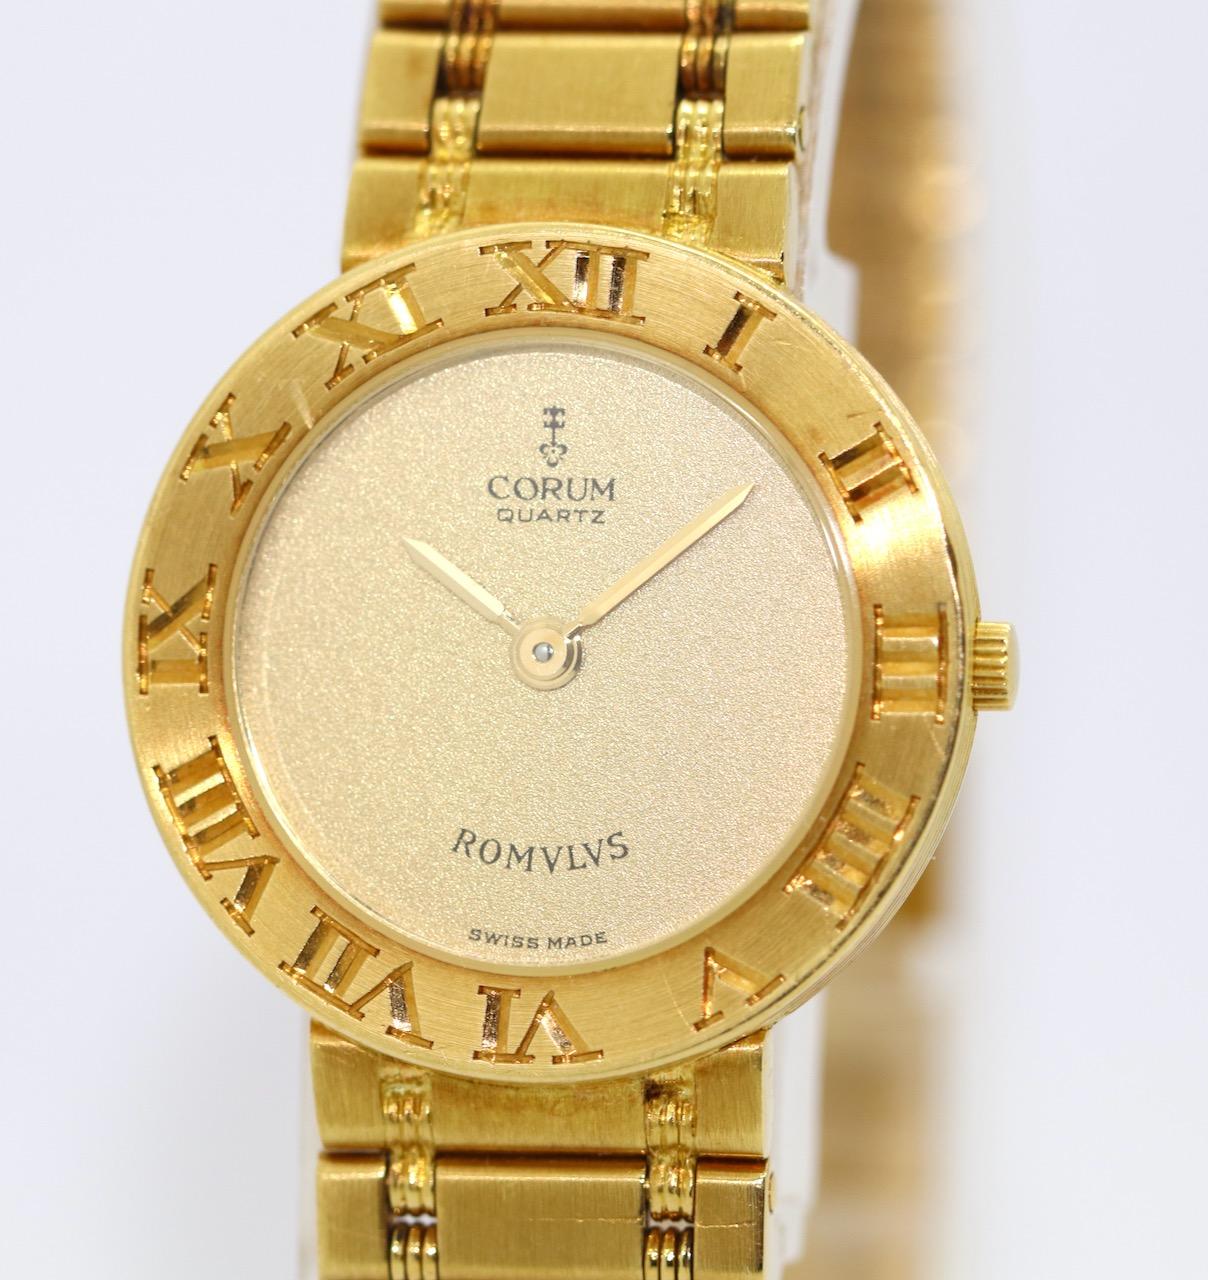 Corum Romulus Ladies Wrist Watch, 18 Karat Gold

Ref. 30.101.56
Case and strap in 18 Karat solid Gold.
Quartz Movement.

Including certificate of authenticity.